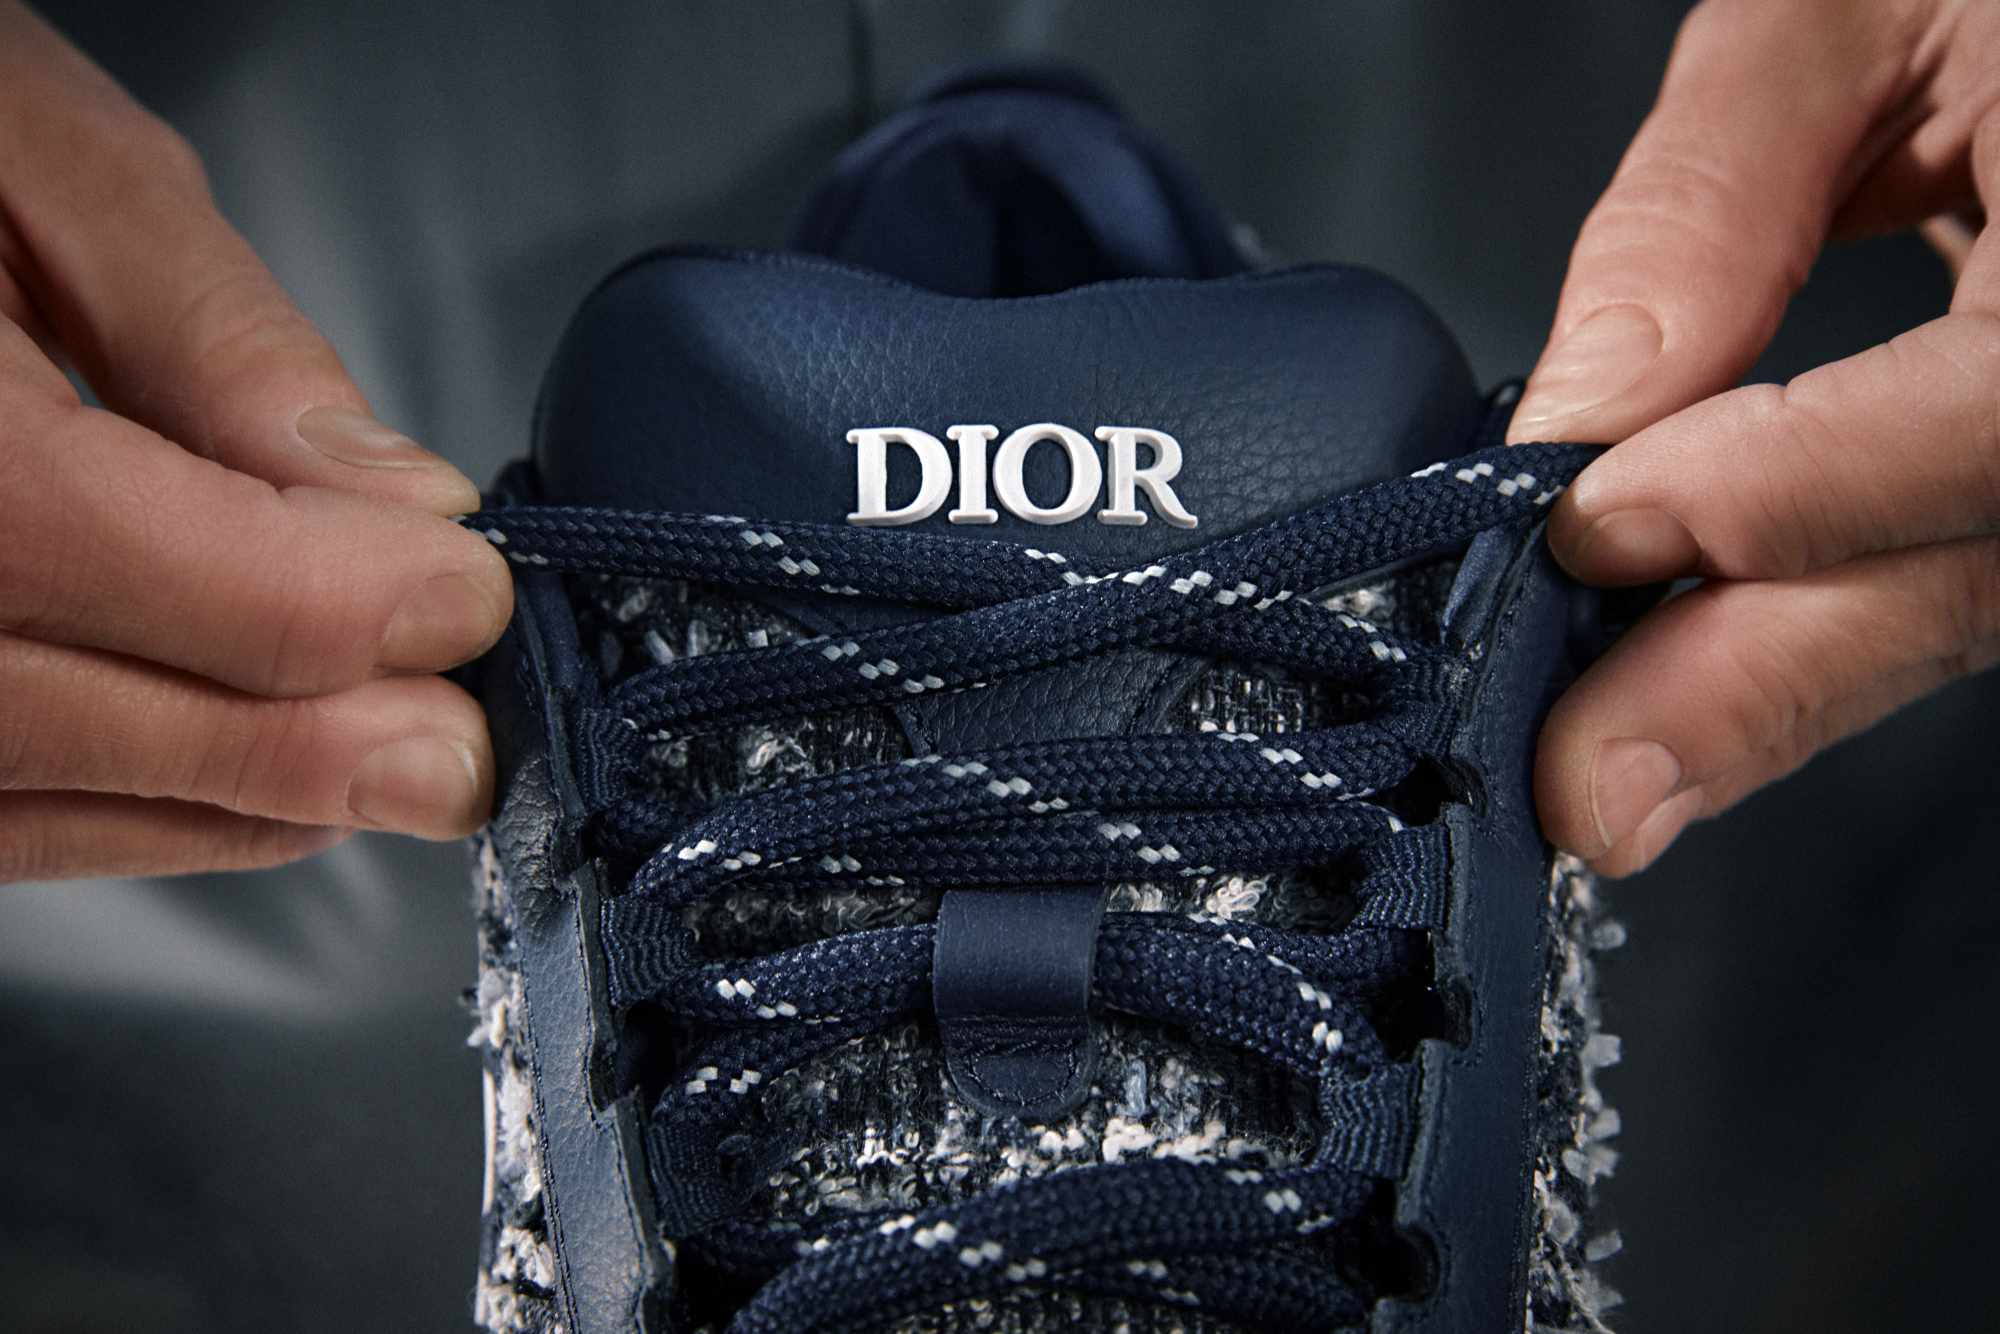 Dior's B9s menswear sneaker